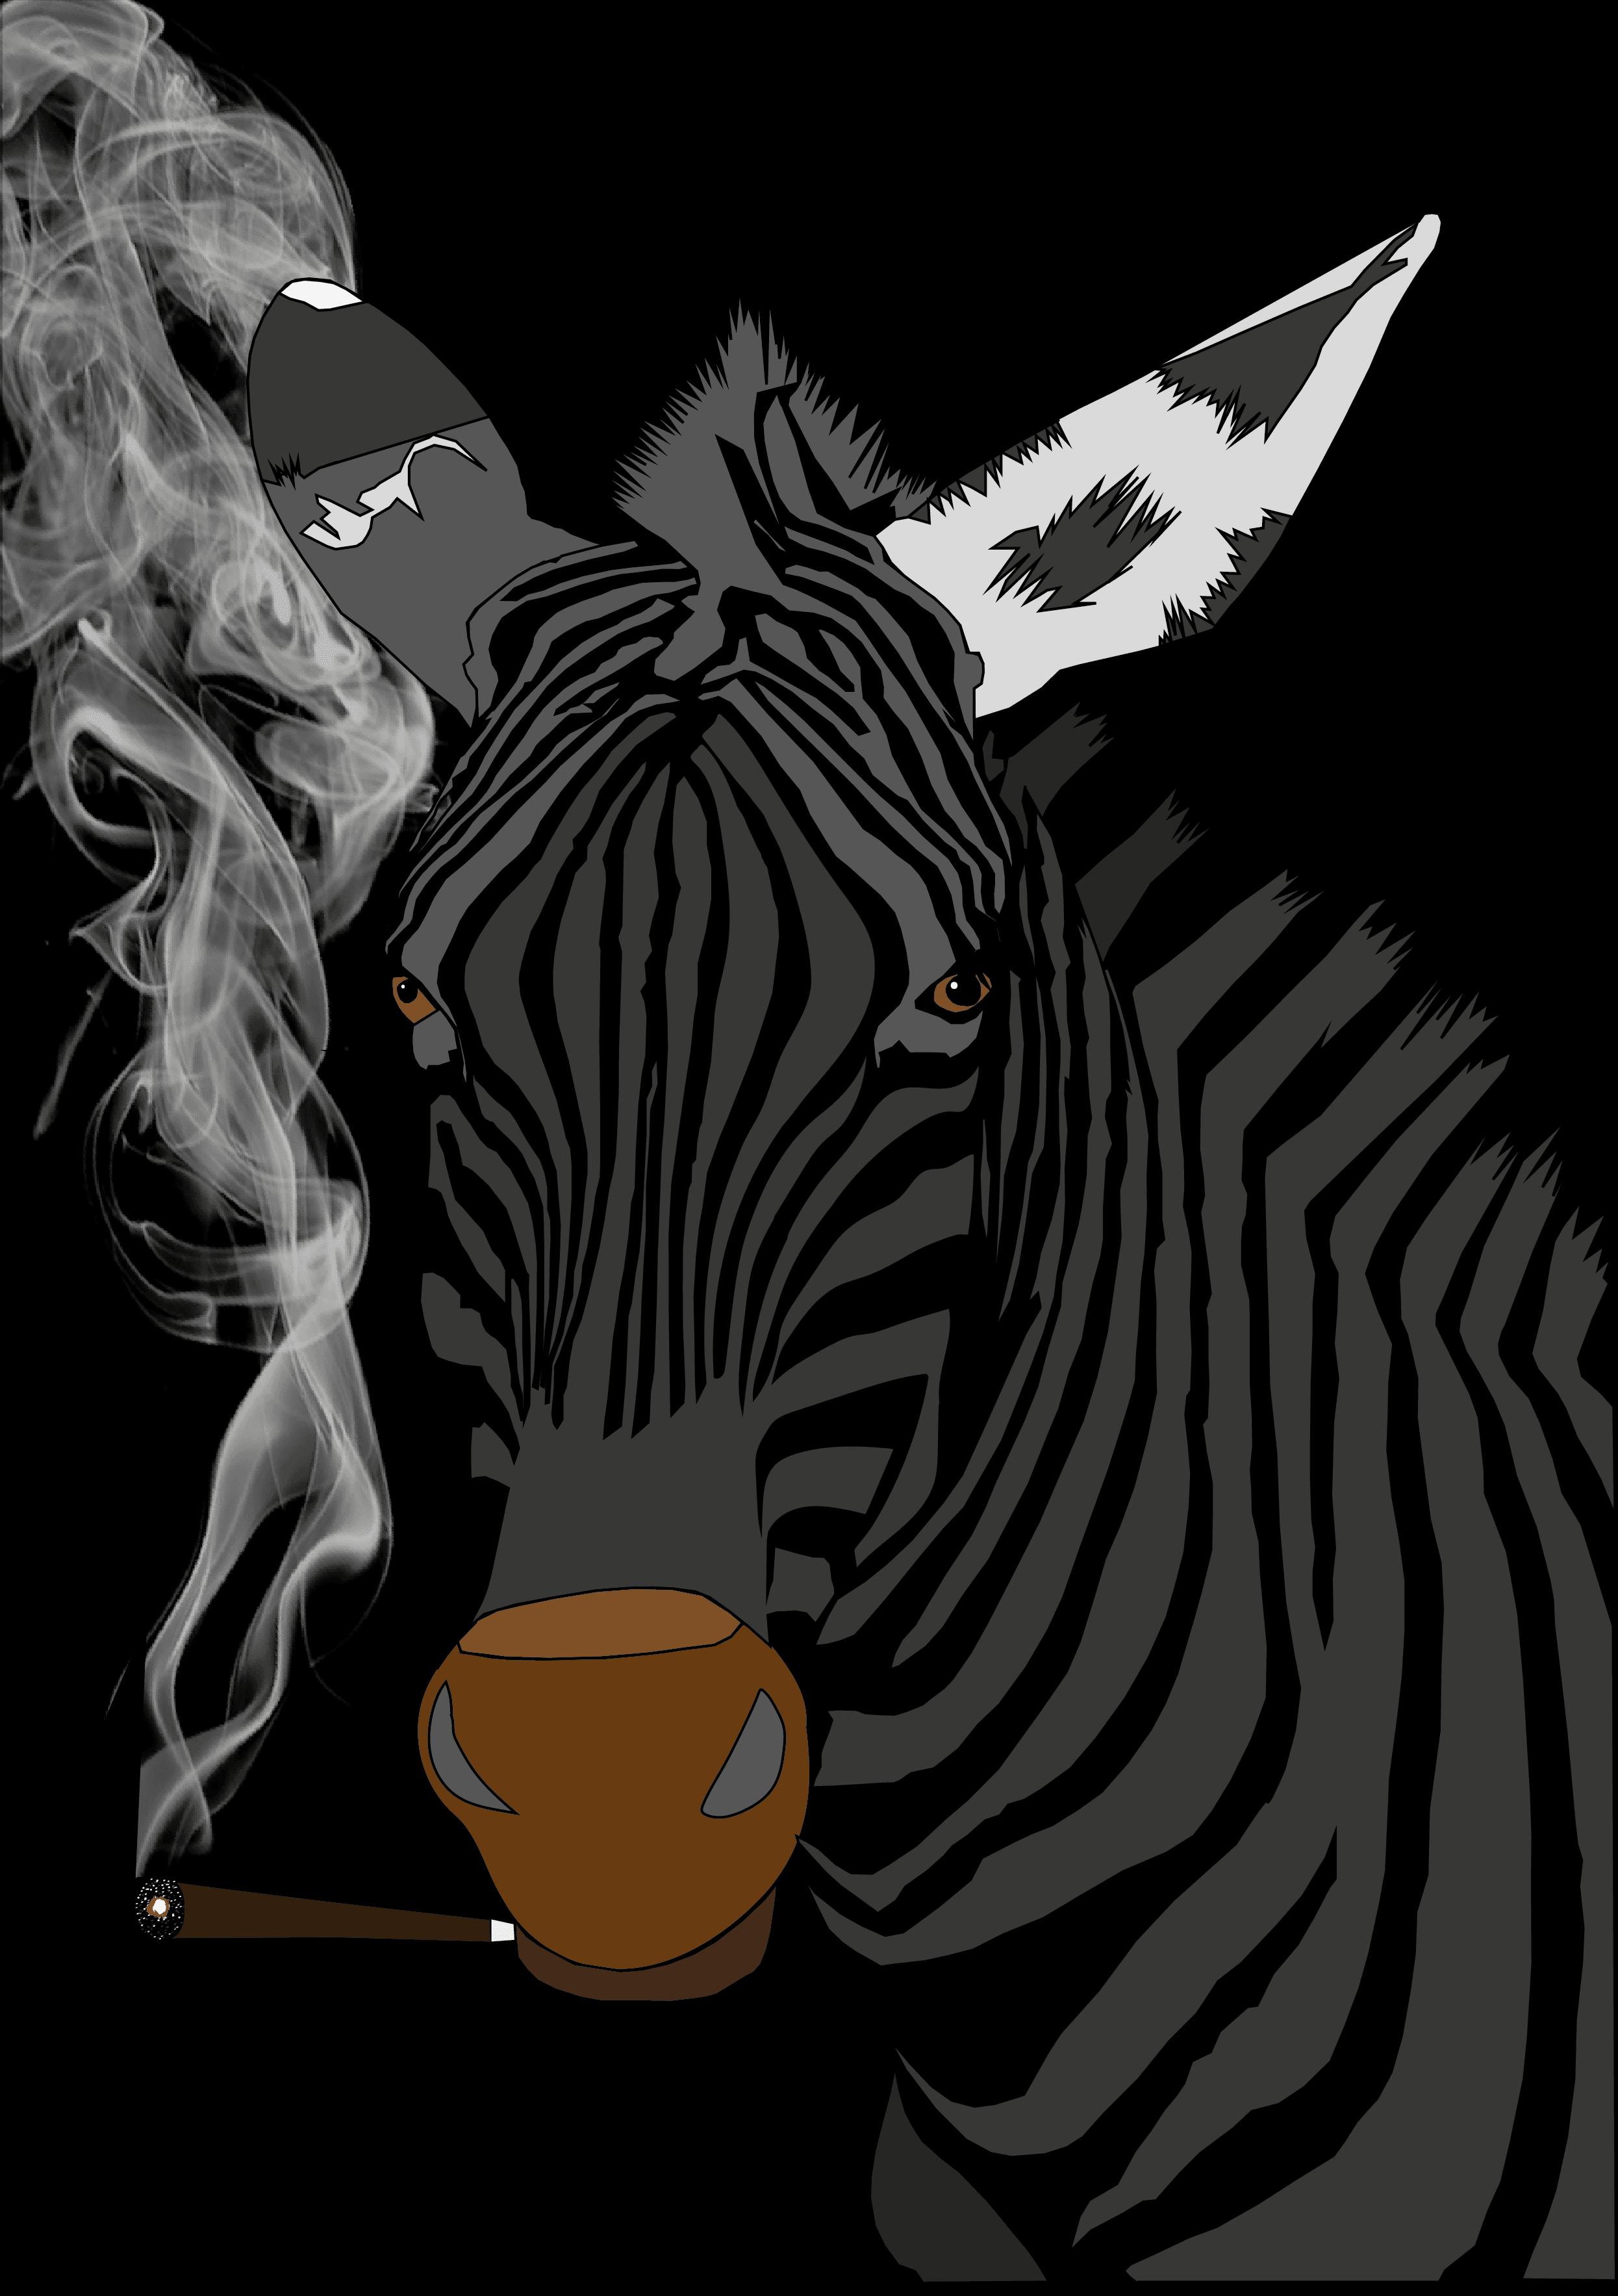 Stoned Zebra #6